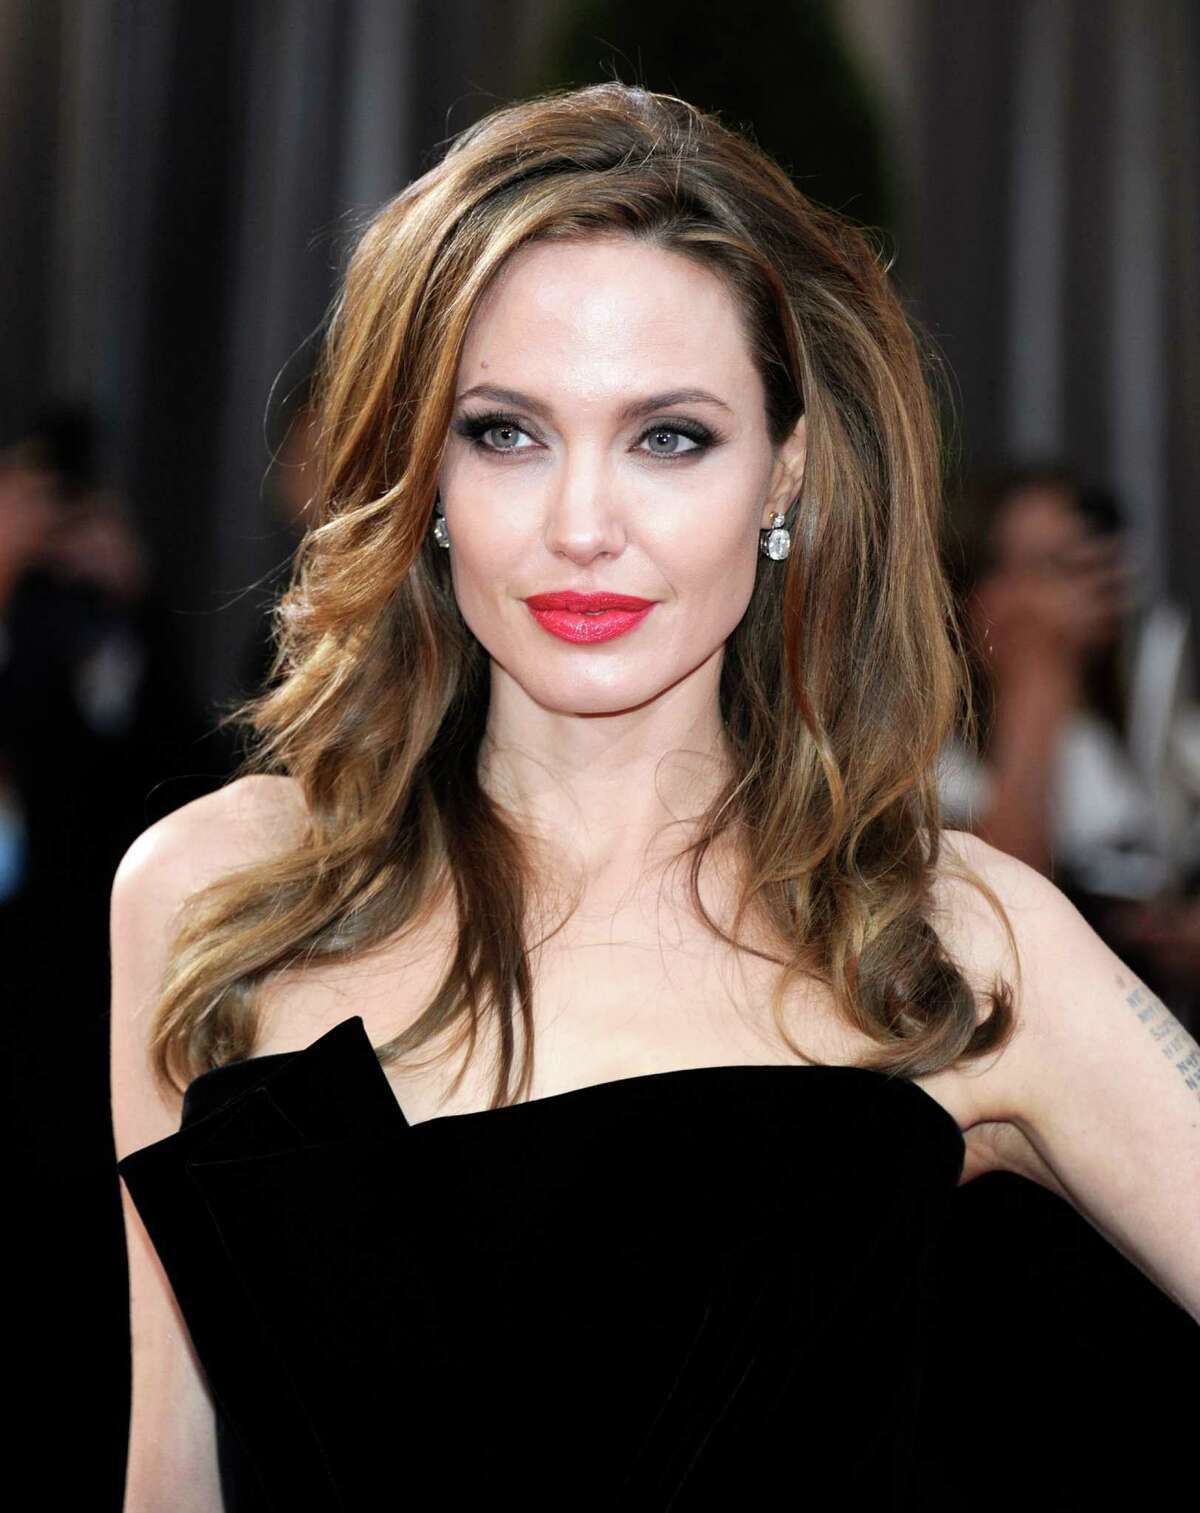 Angelina Jolie - Wikipedia